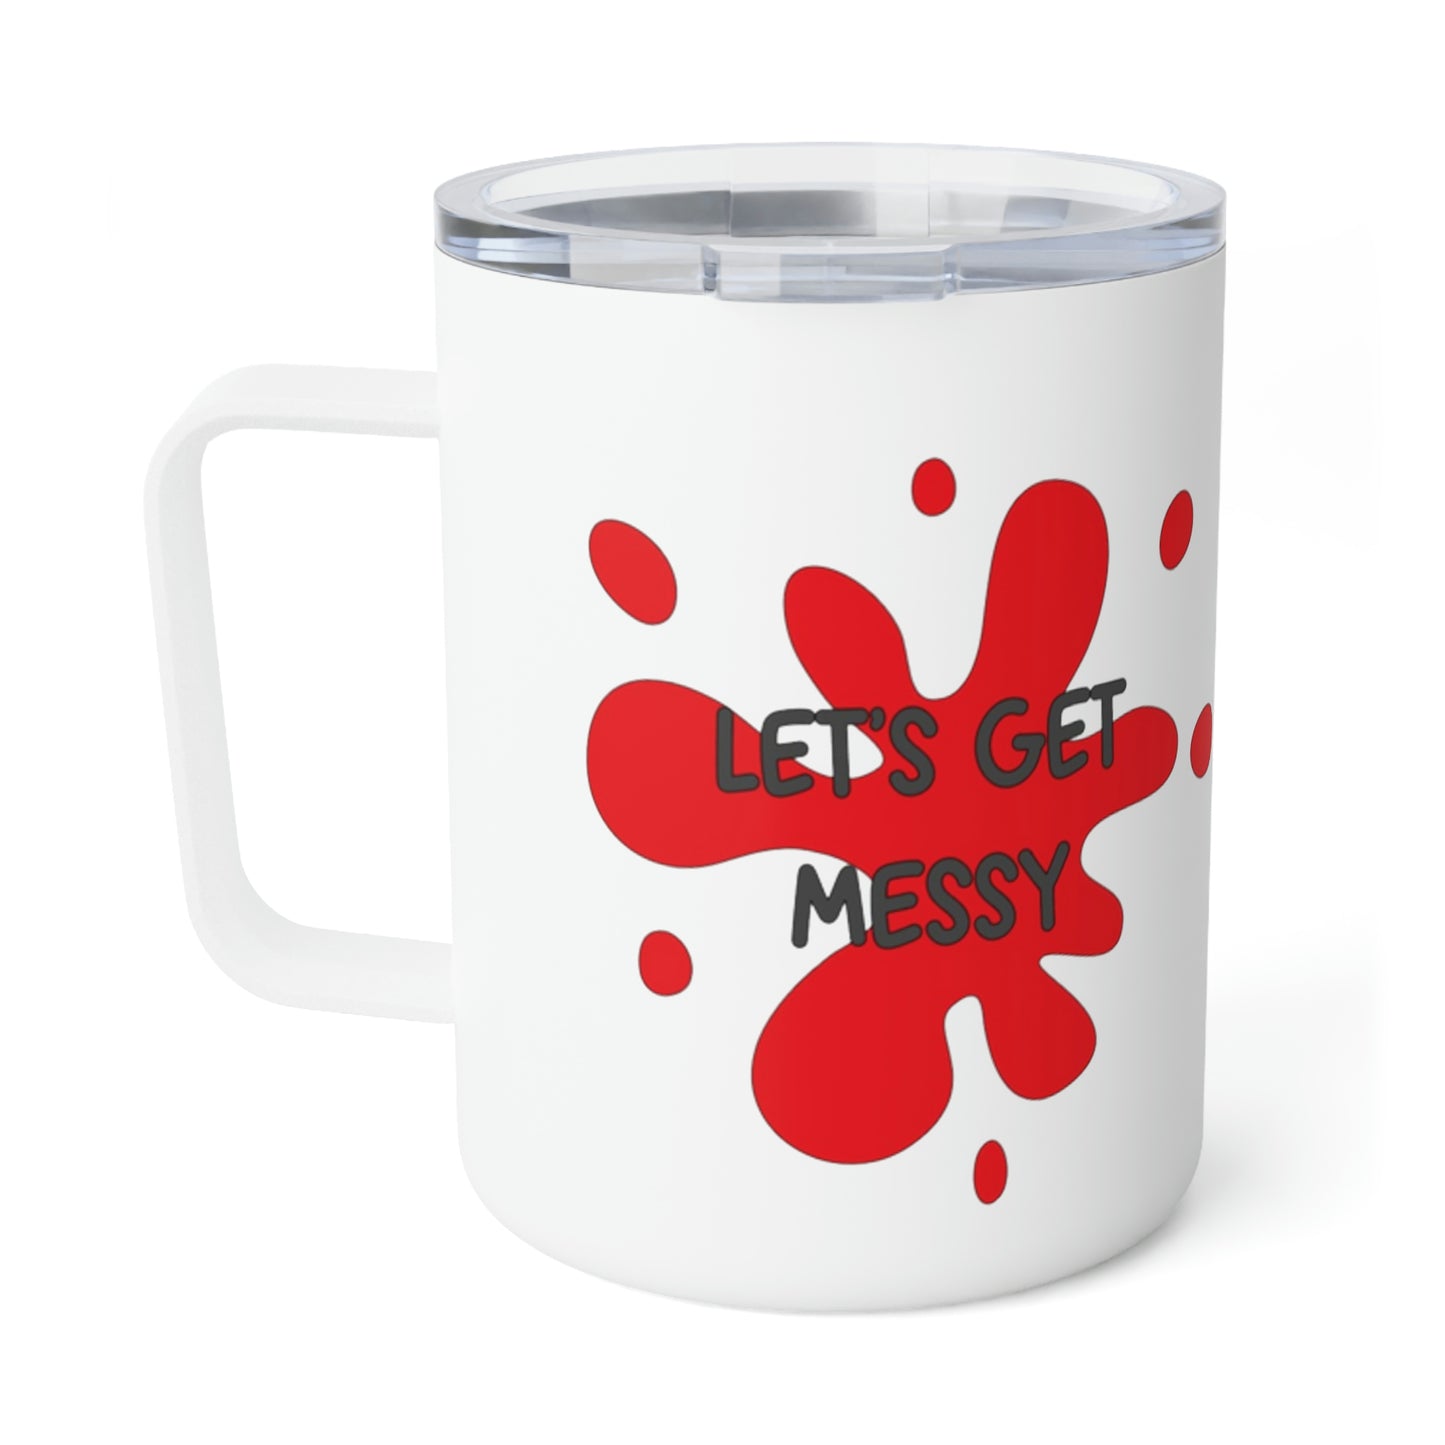 " Let's Get Messy" Insulated Coffee Mug, 10oz